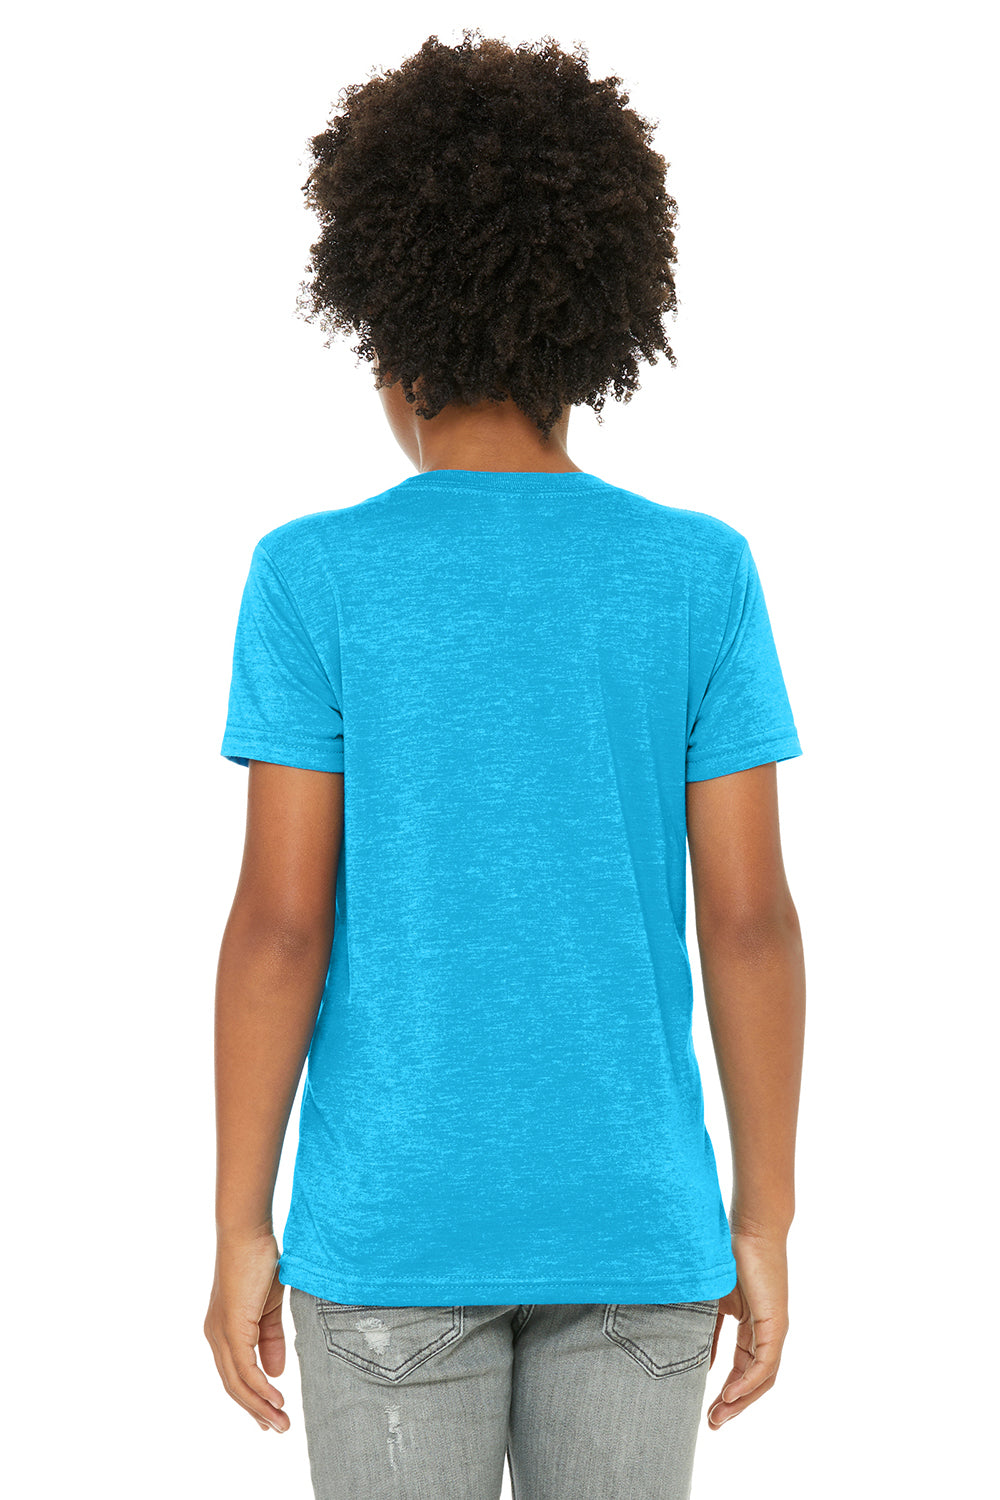 Bella + Canvas 3001Y Youth Jersey Short Sleeve Crewneck T-Shirt Neon Blue Model Back